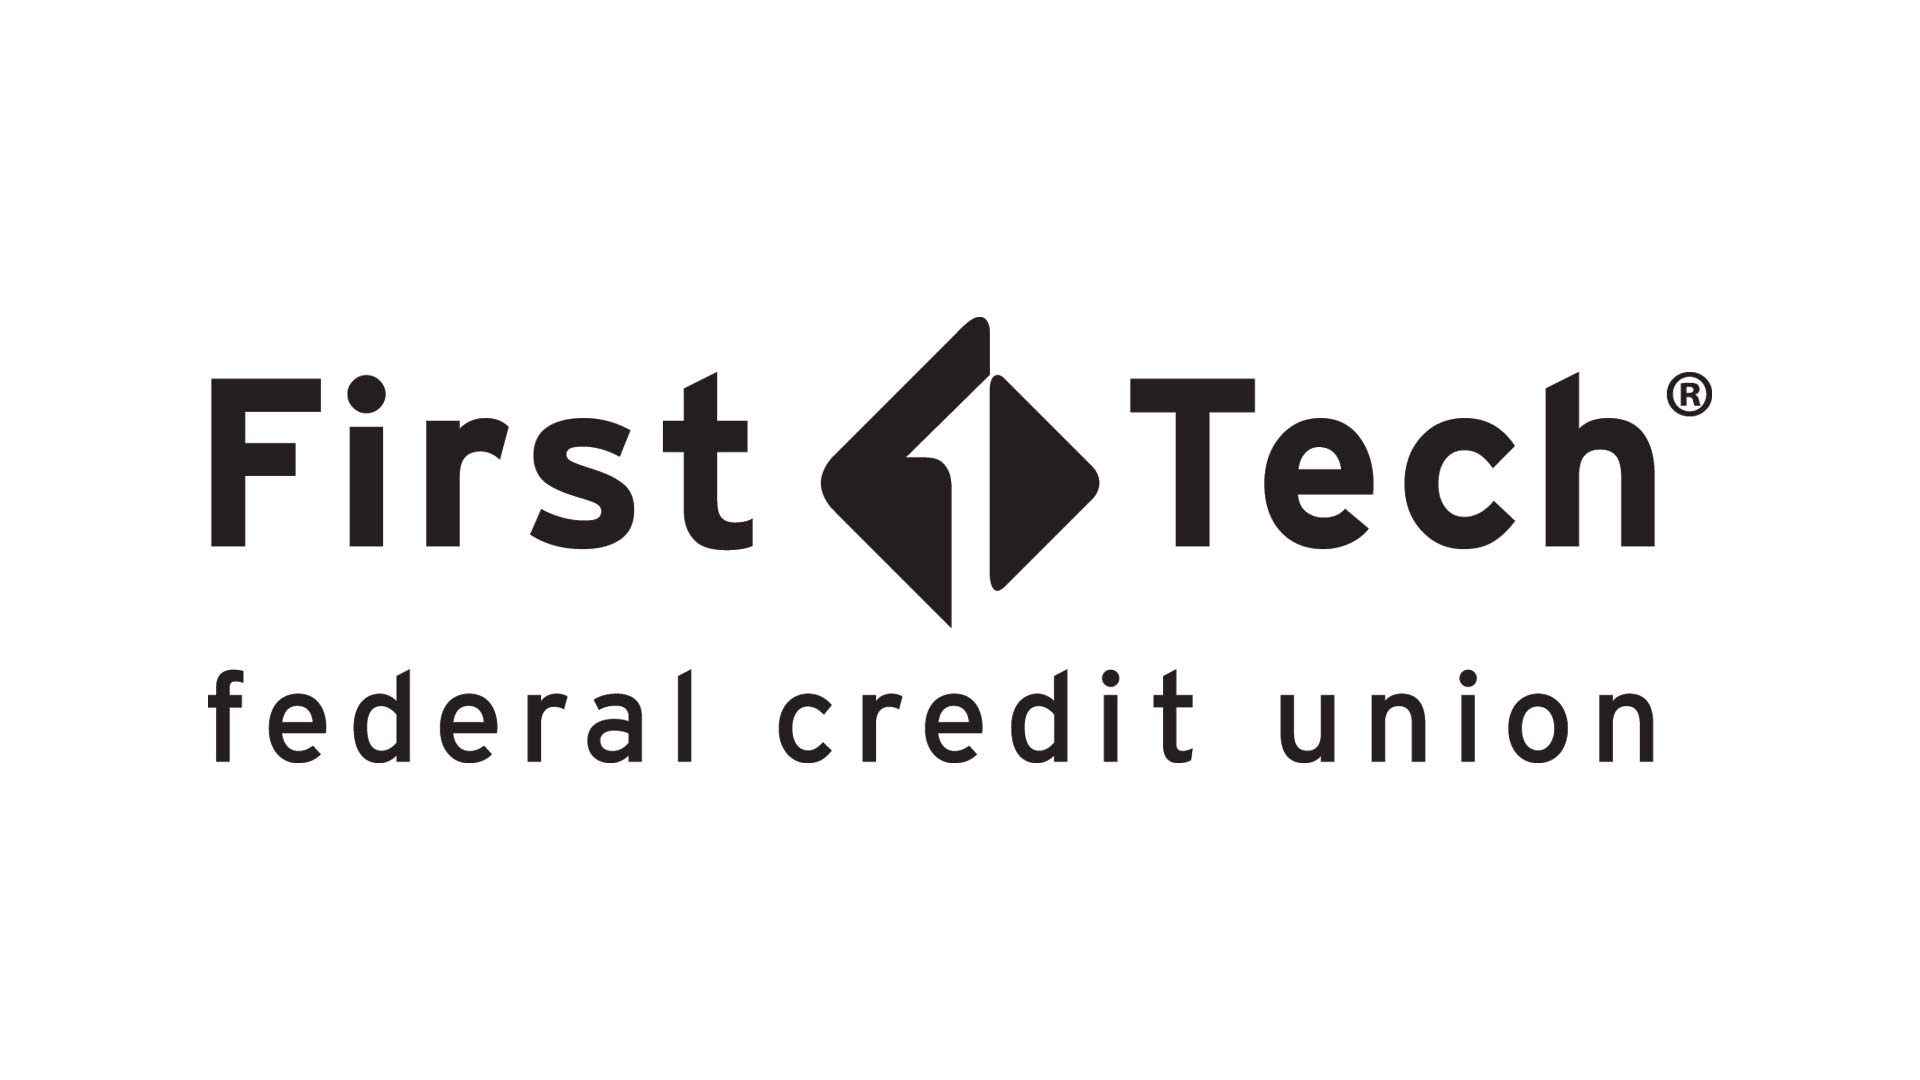 First Tech Federal Credit Union logo